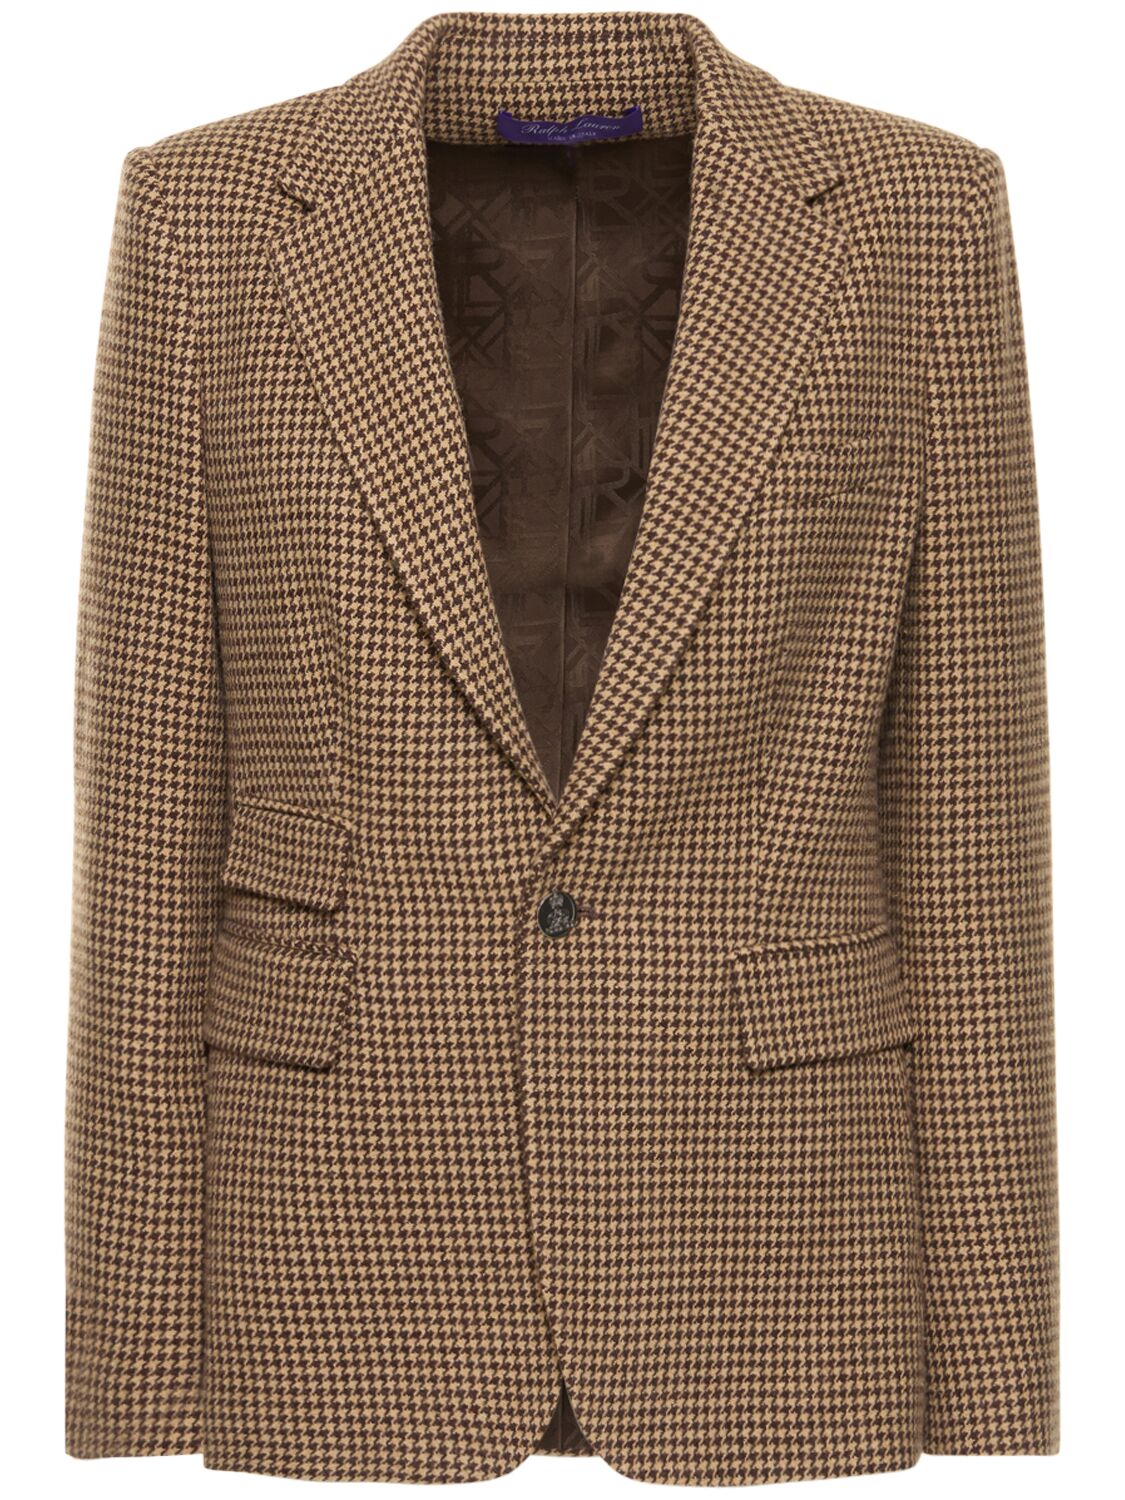 Image of Tweed Houndstooth Jacket